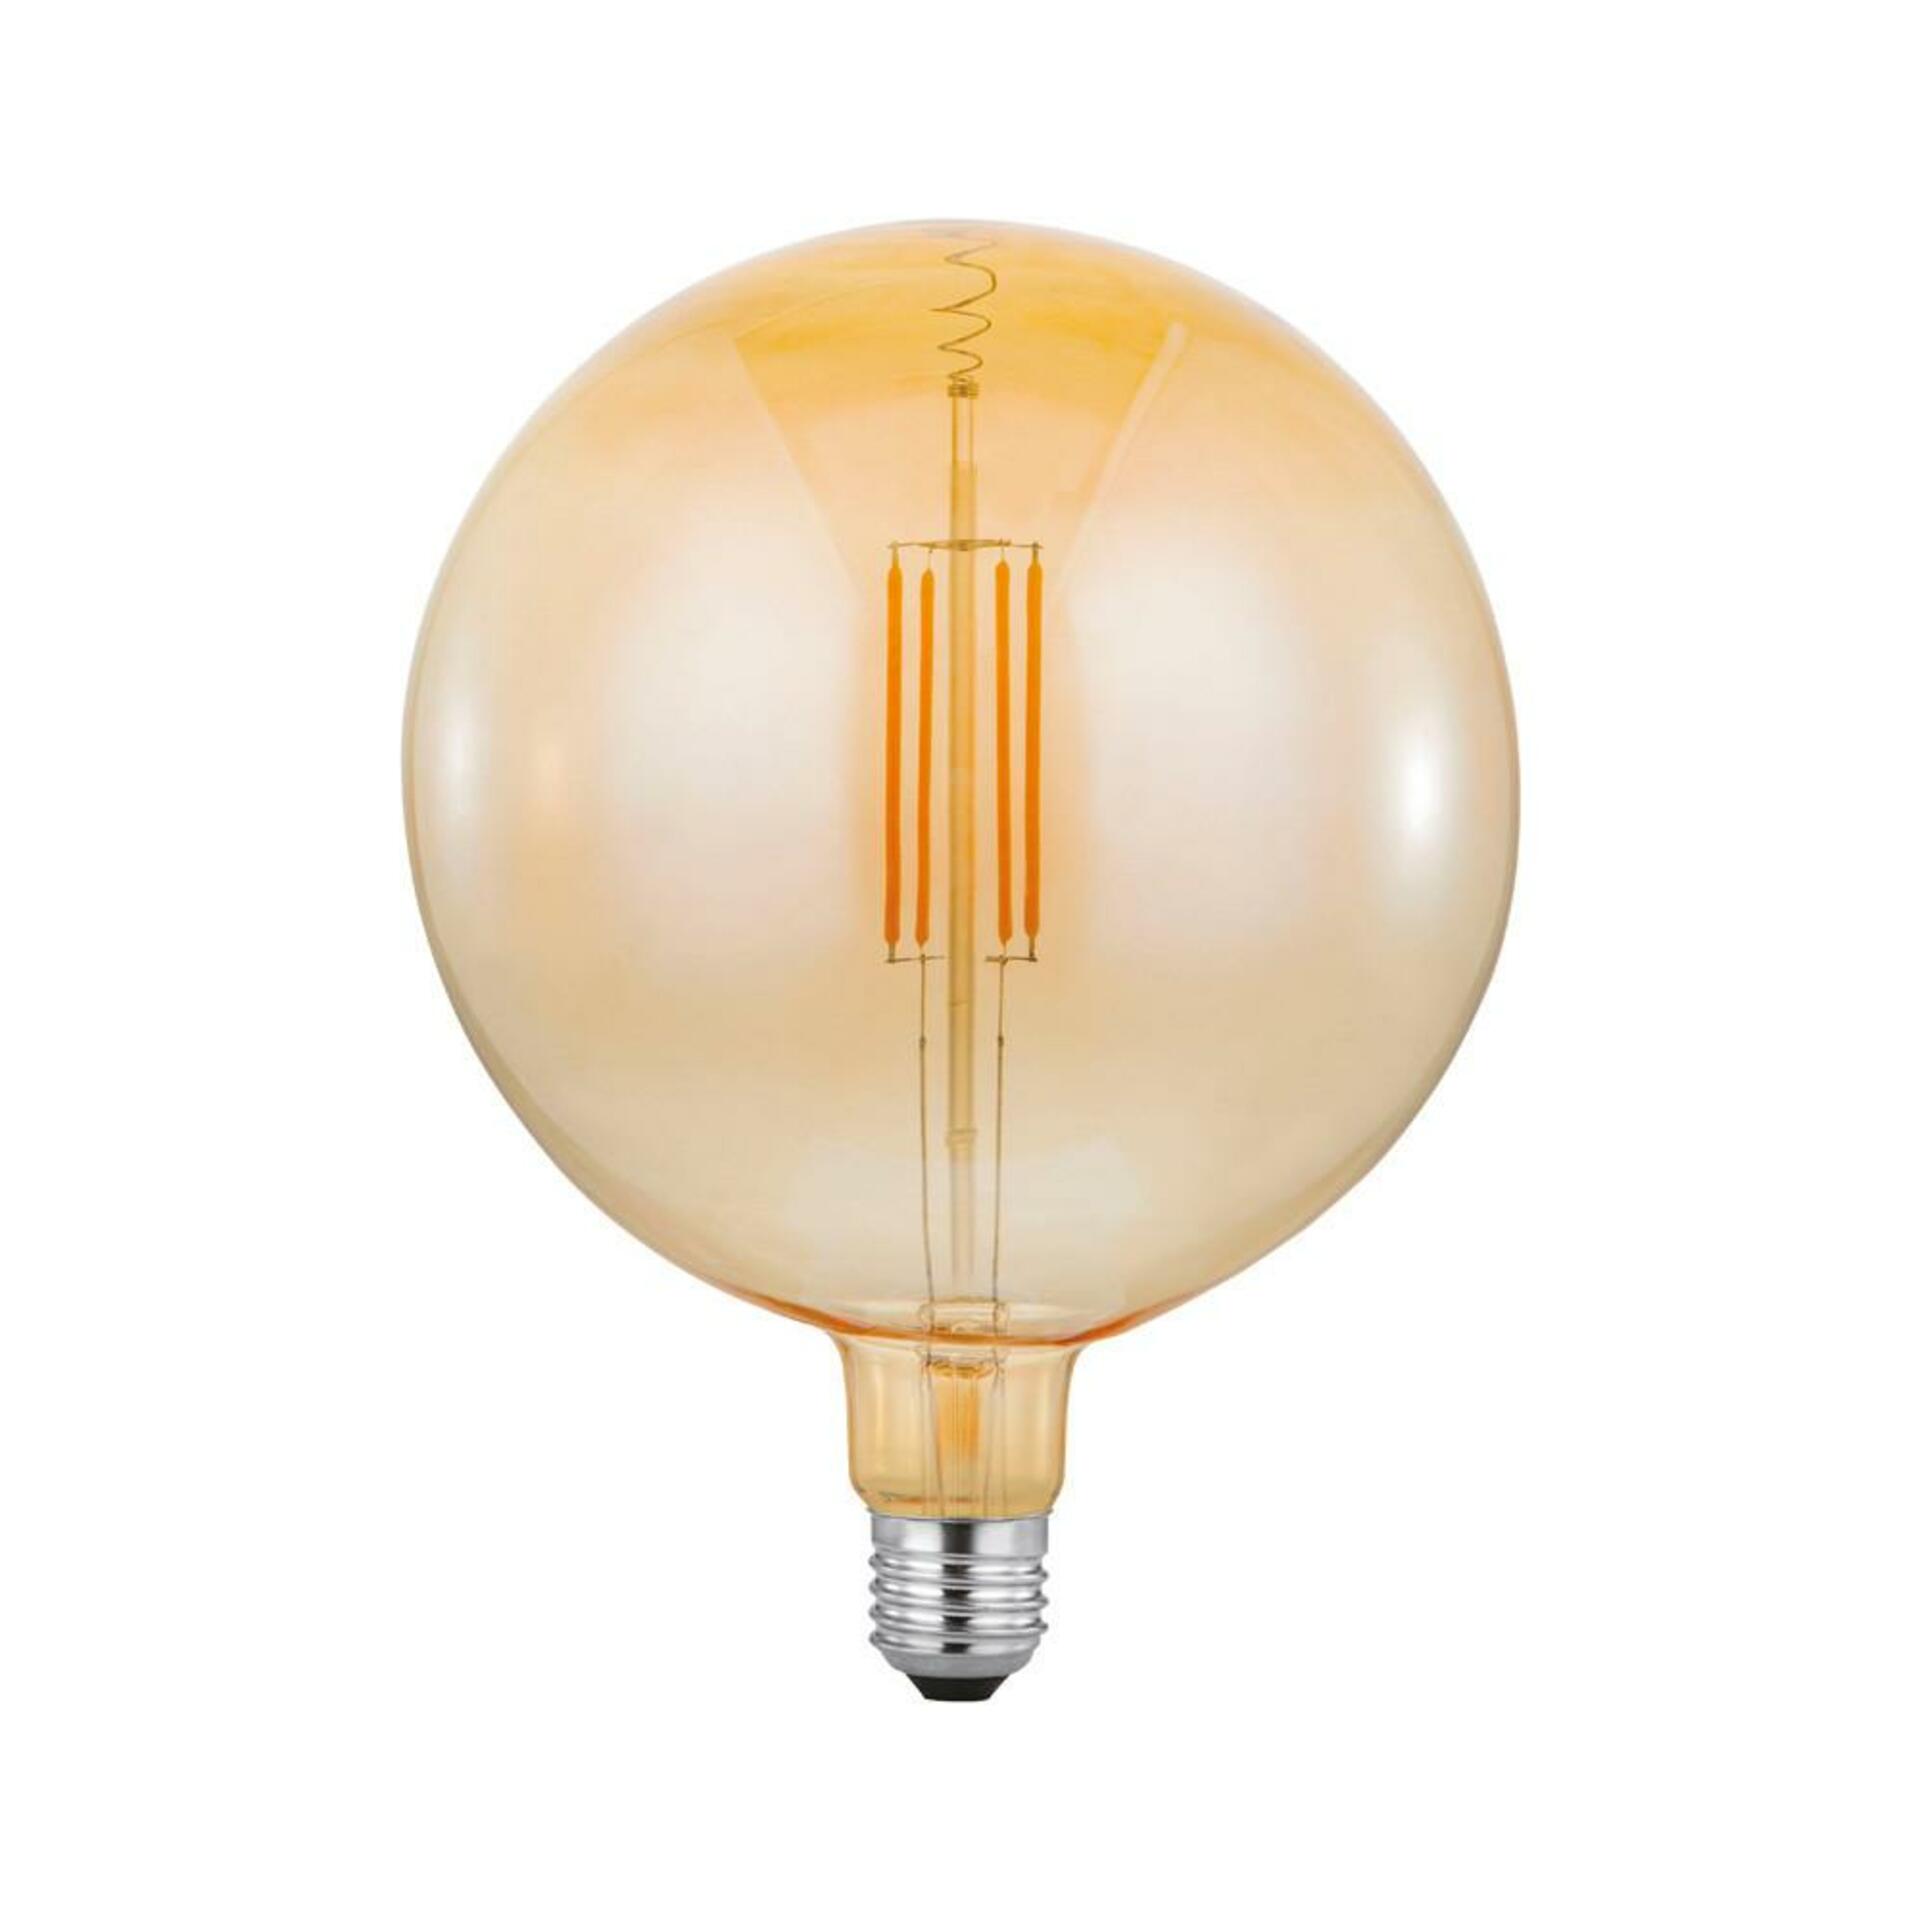 JUST LIGHT LEUCHTEN DIRECT LED Filament Globe, 4W E27, průměr 180mm 3000K DIM 08463 LD 08463